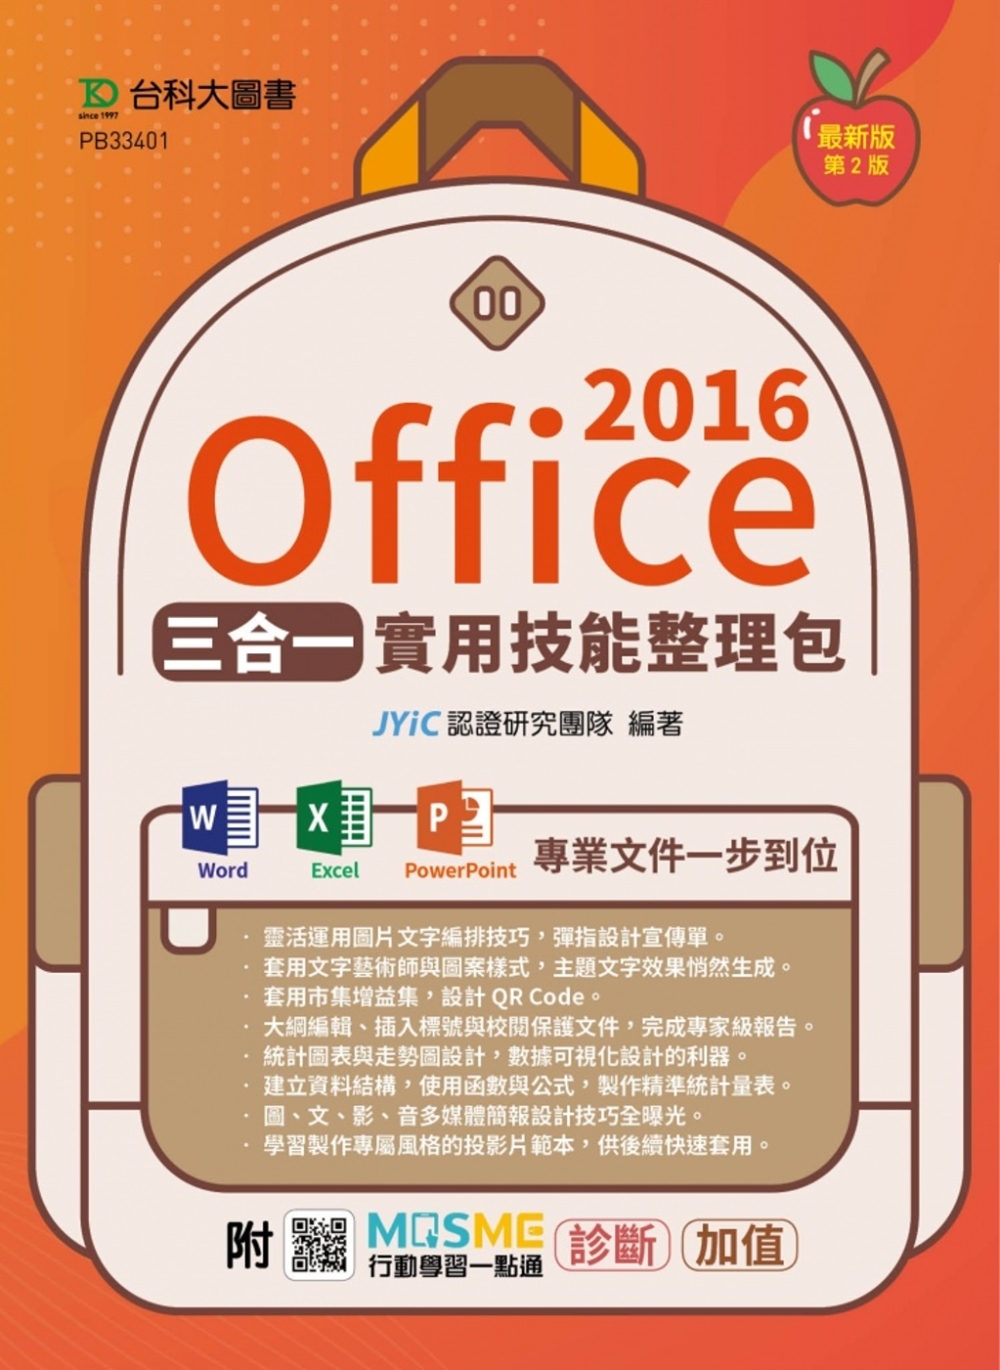 Office 2016三合一實用技能整理包 - 附MOSME...